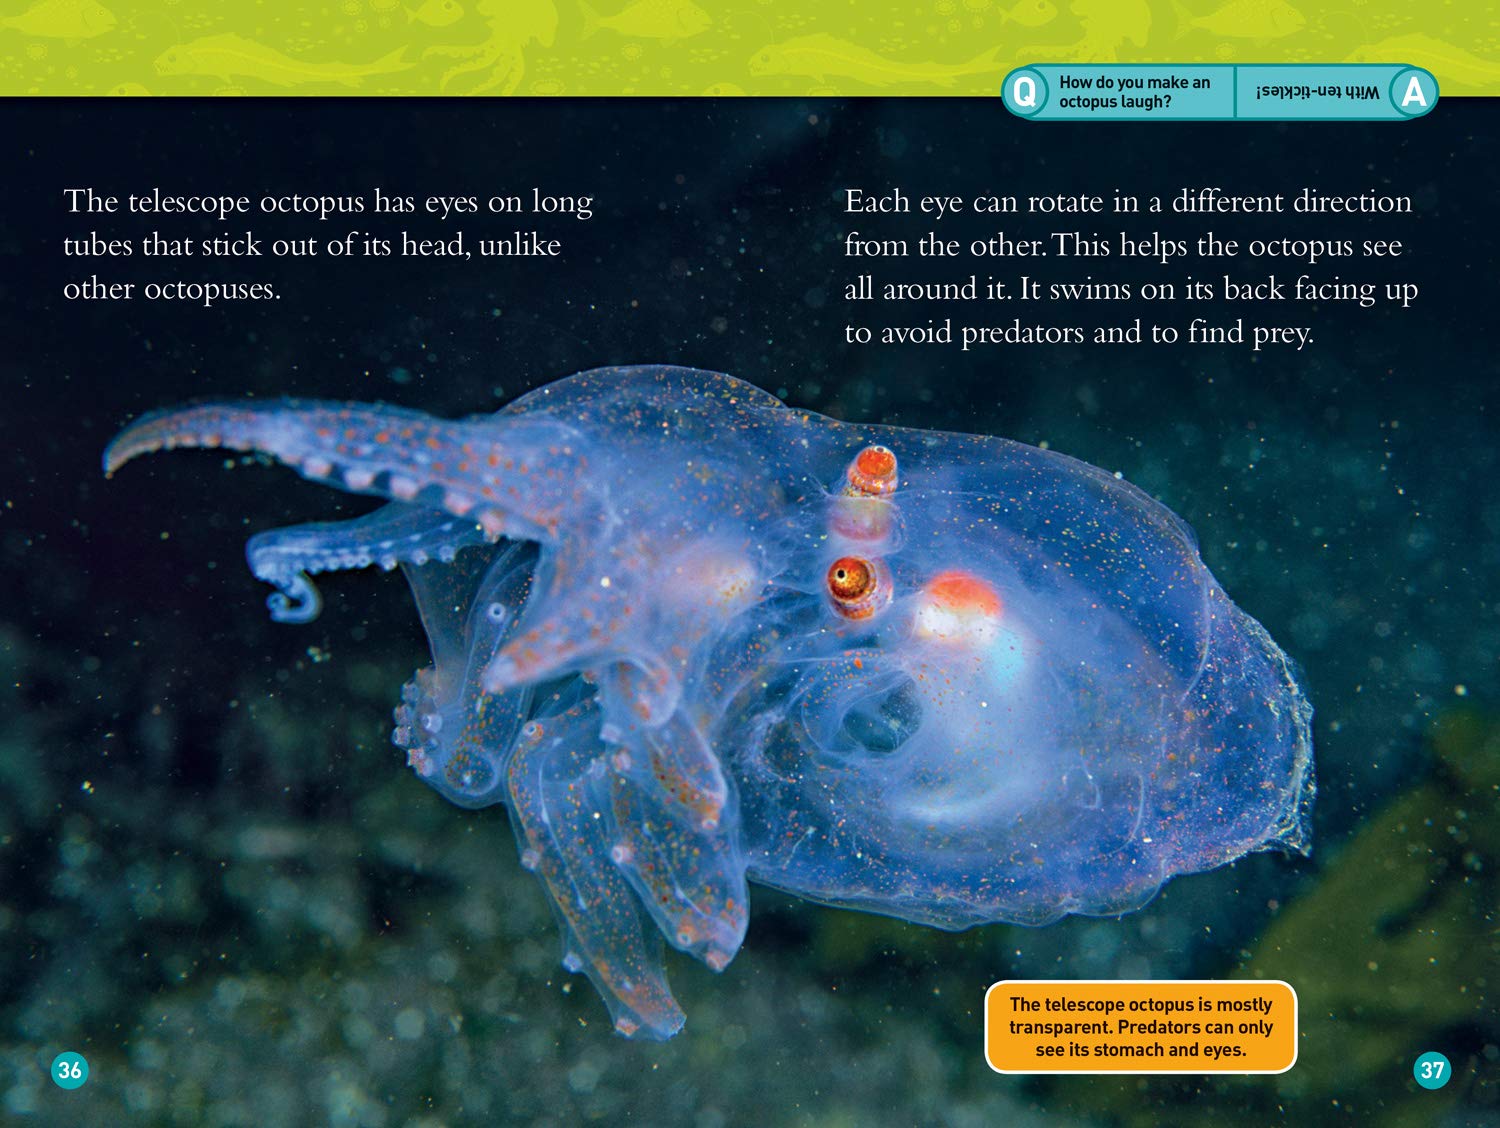 National Geographic Readers: Alien Ocean Animals (L3)